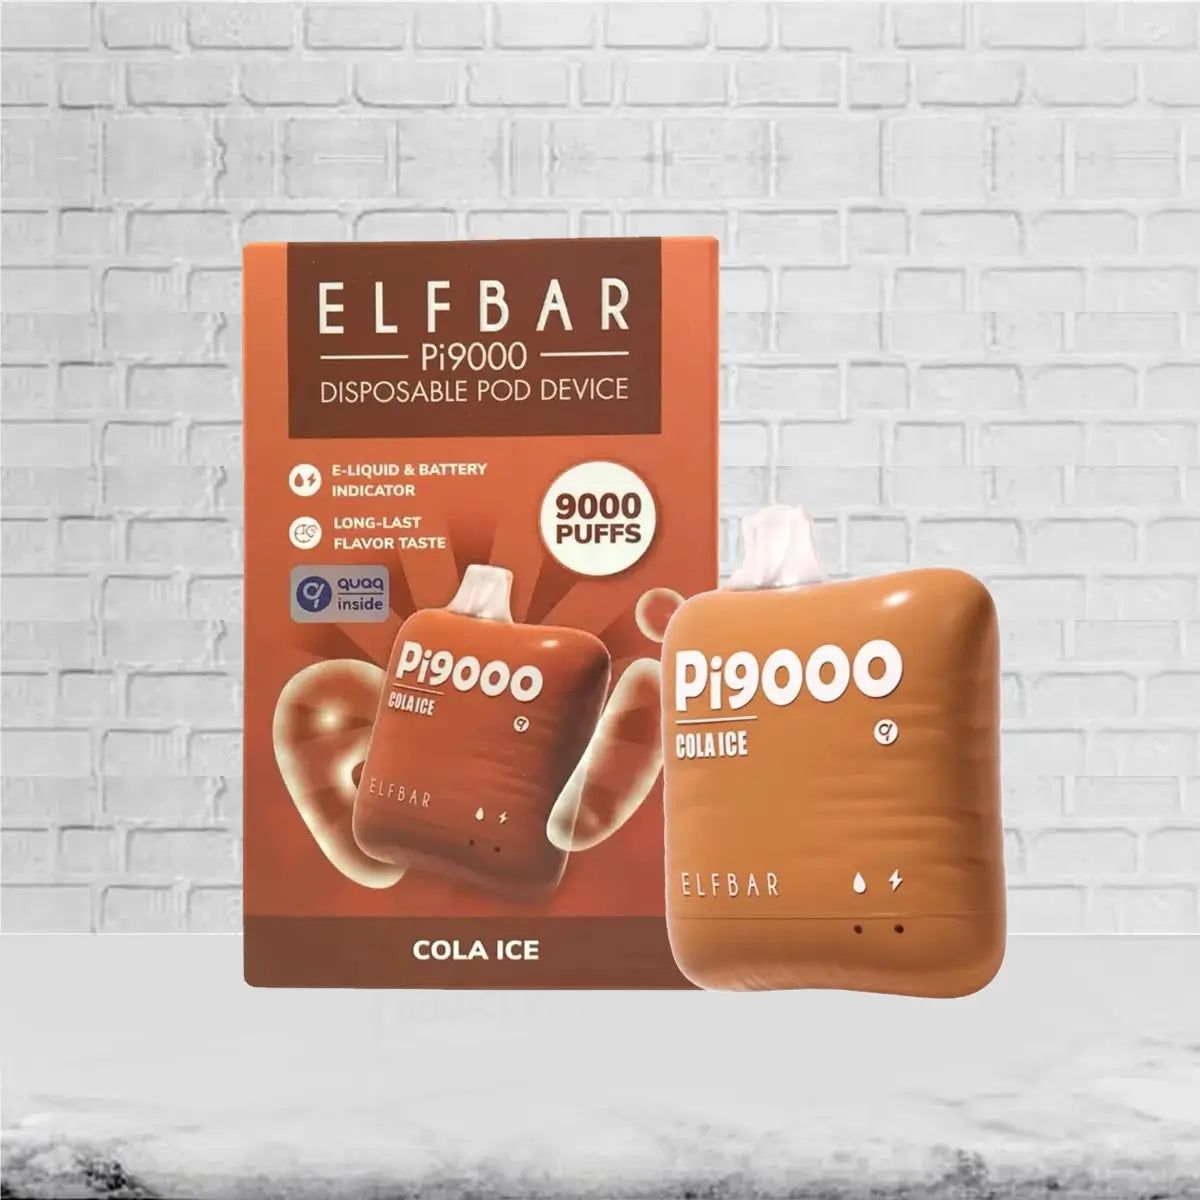 Elf Bar Pi9000 Puff Cola ice - Dijital Sigara